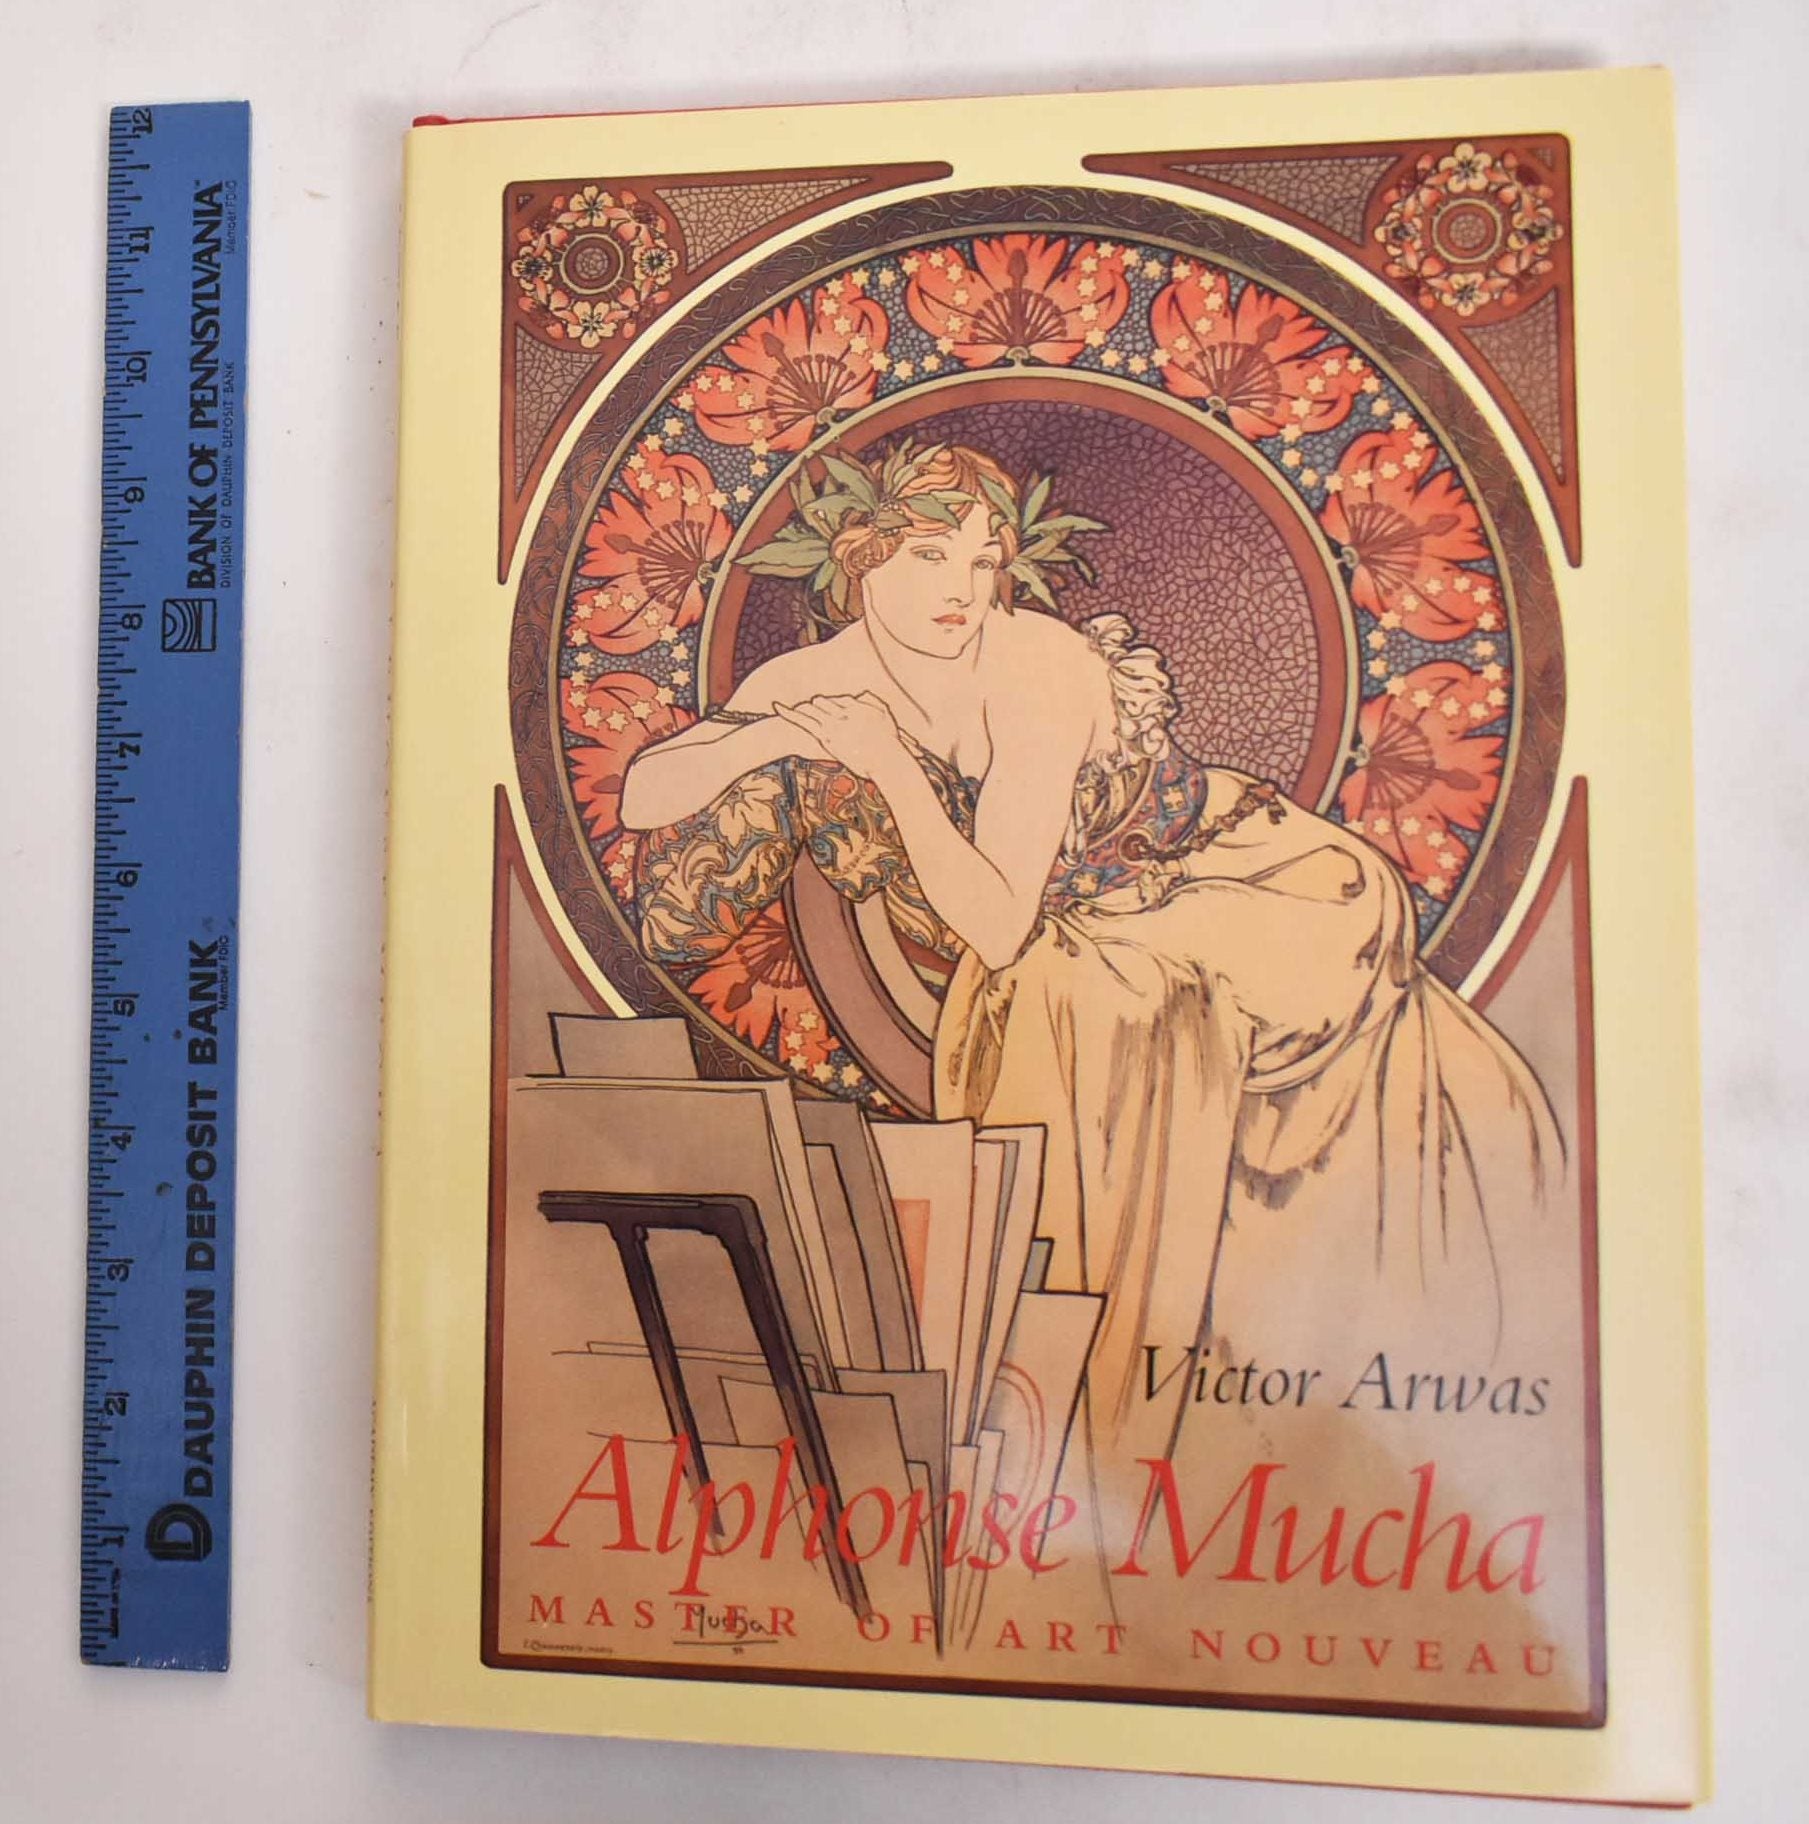 Alphonse Mucha: The Spirit of Art Nouveau by Victor Arwas on Mullen Books